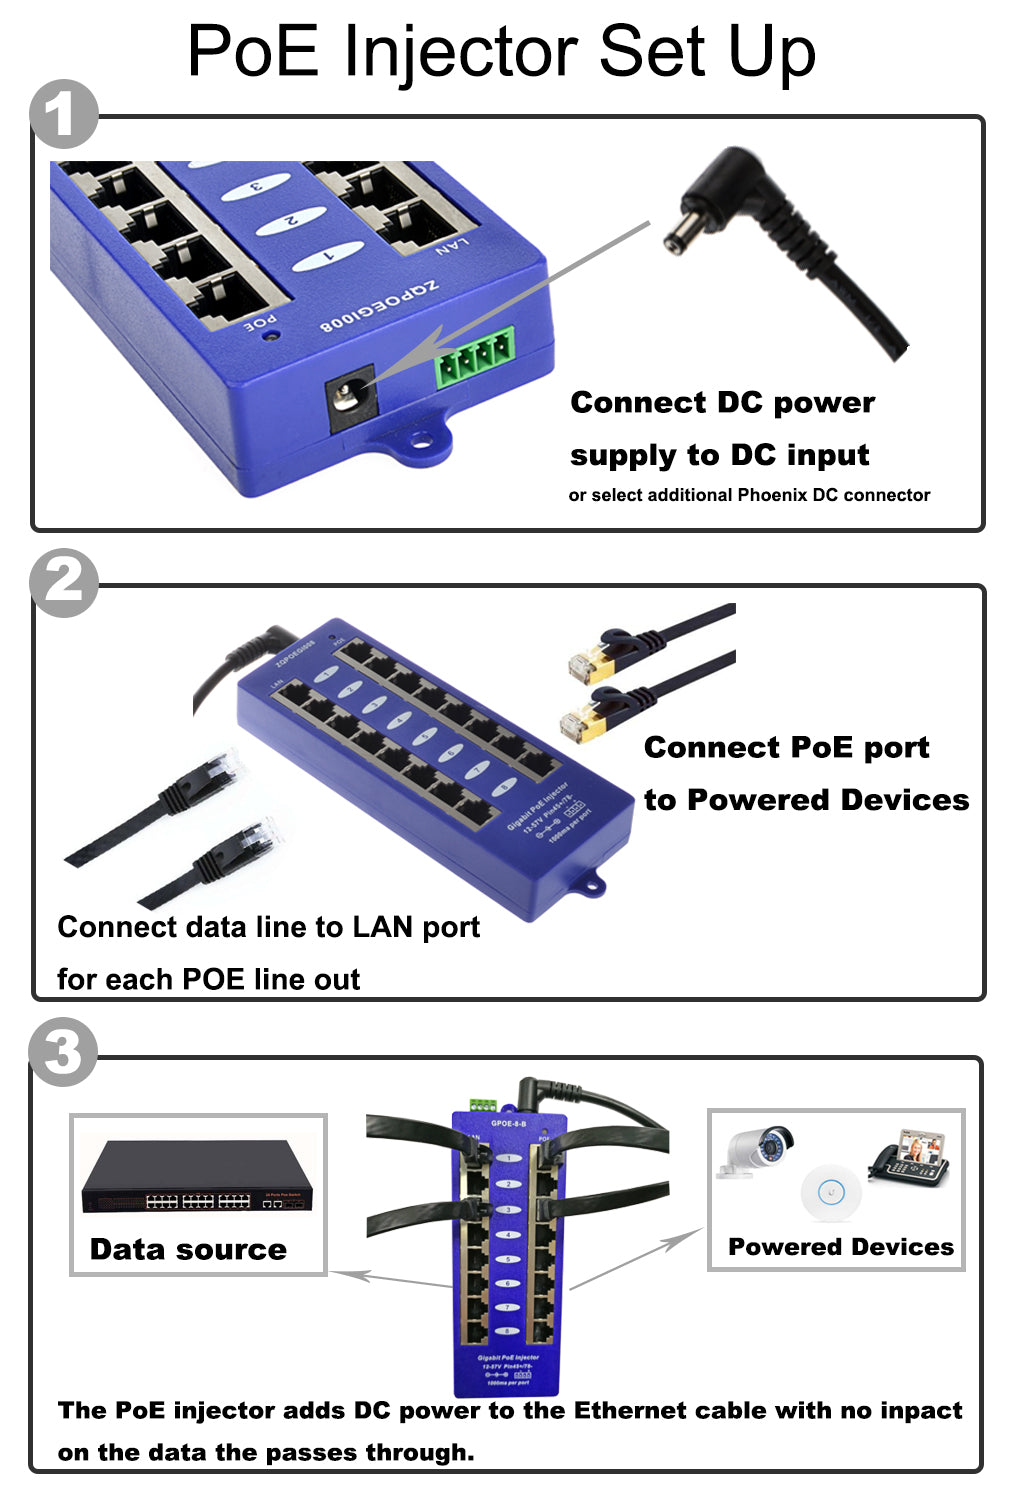 GPOE-8-48V60W 8 Port Gigabit Passive Power over Ethernet Injector for Ubiquiti Mikrotik Include 48 Volt 60 Watt Power Adapter